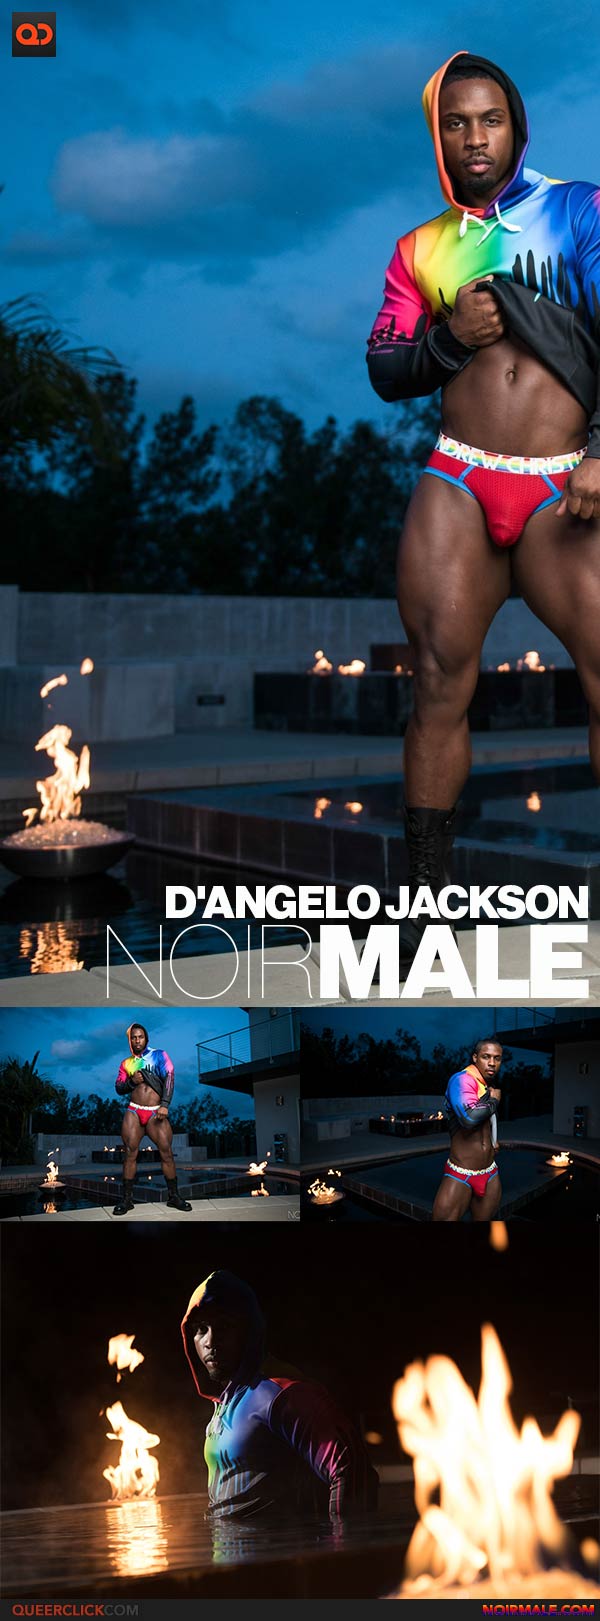 Noir Male: D'Angelo Jackson